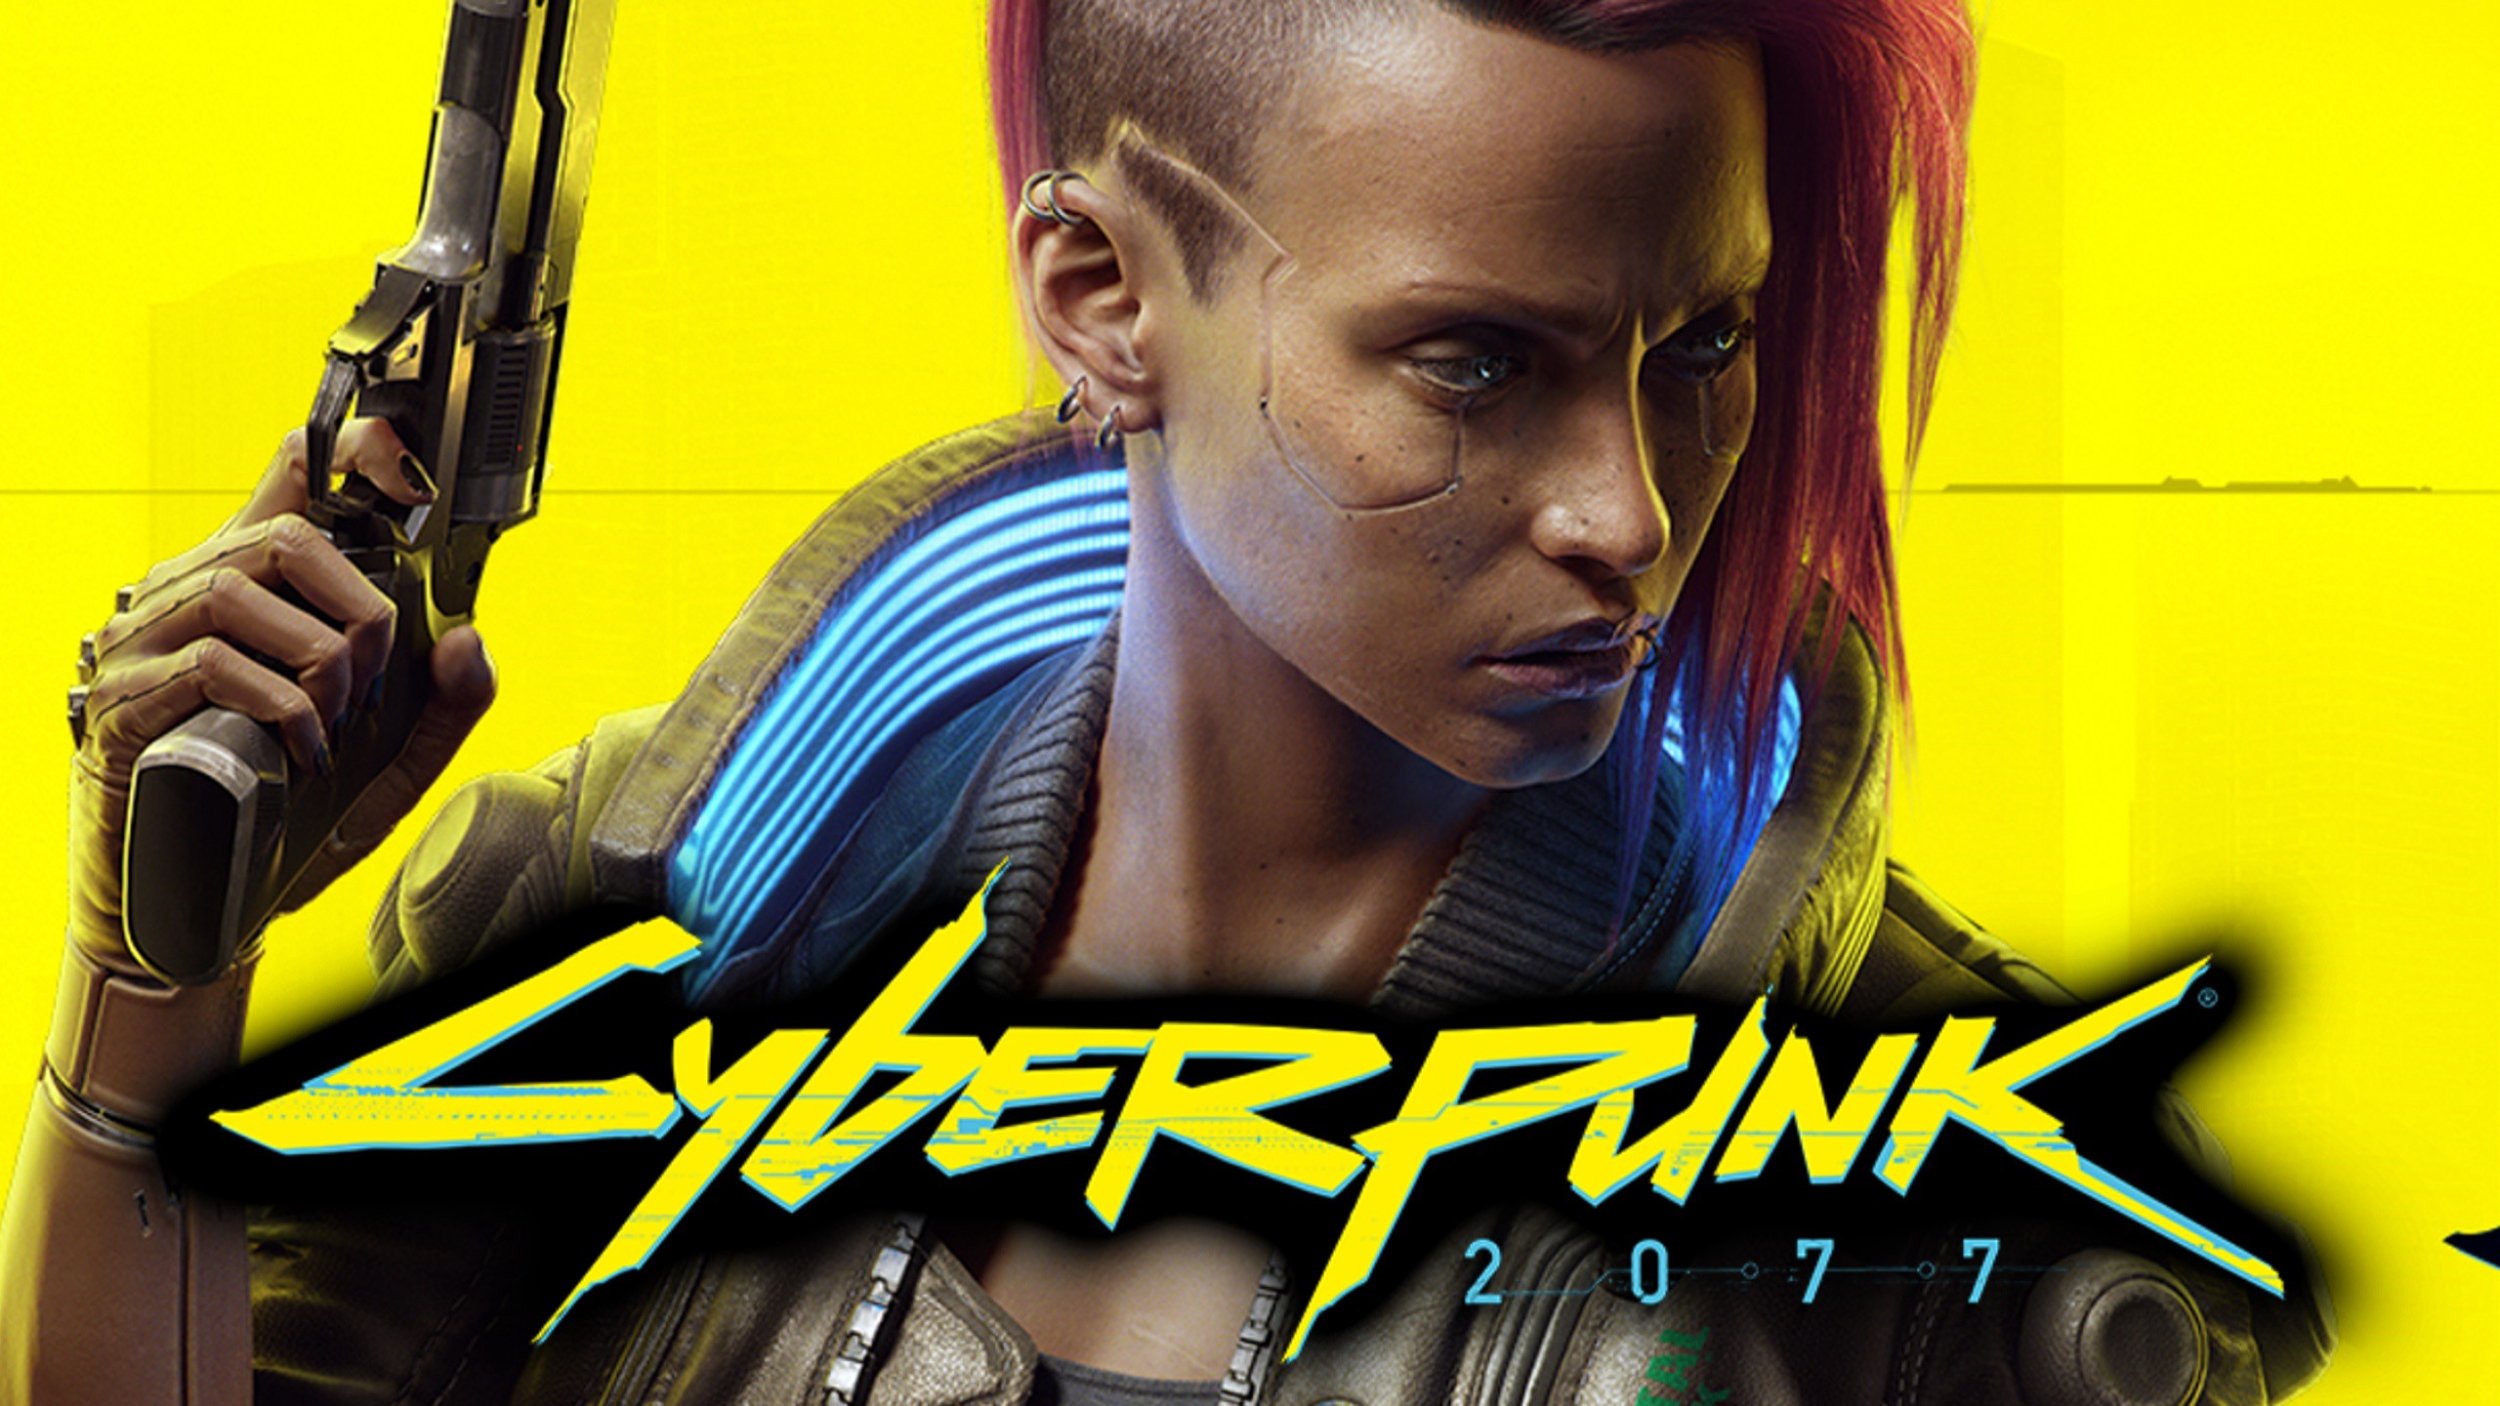 Cyberpunk 2077 Isn't Performing Well on Steam